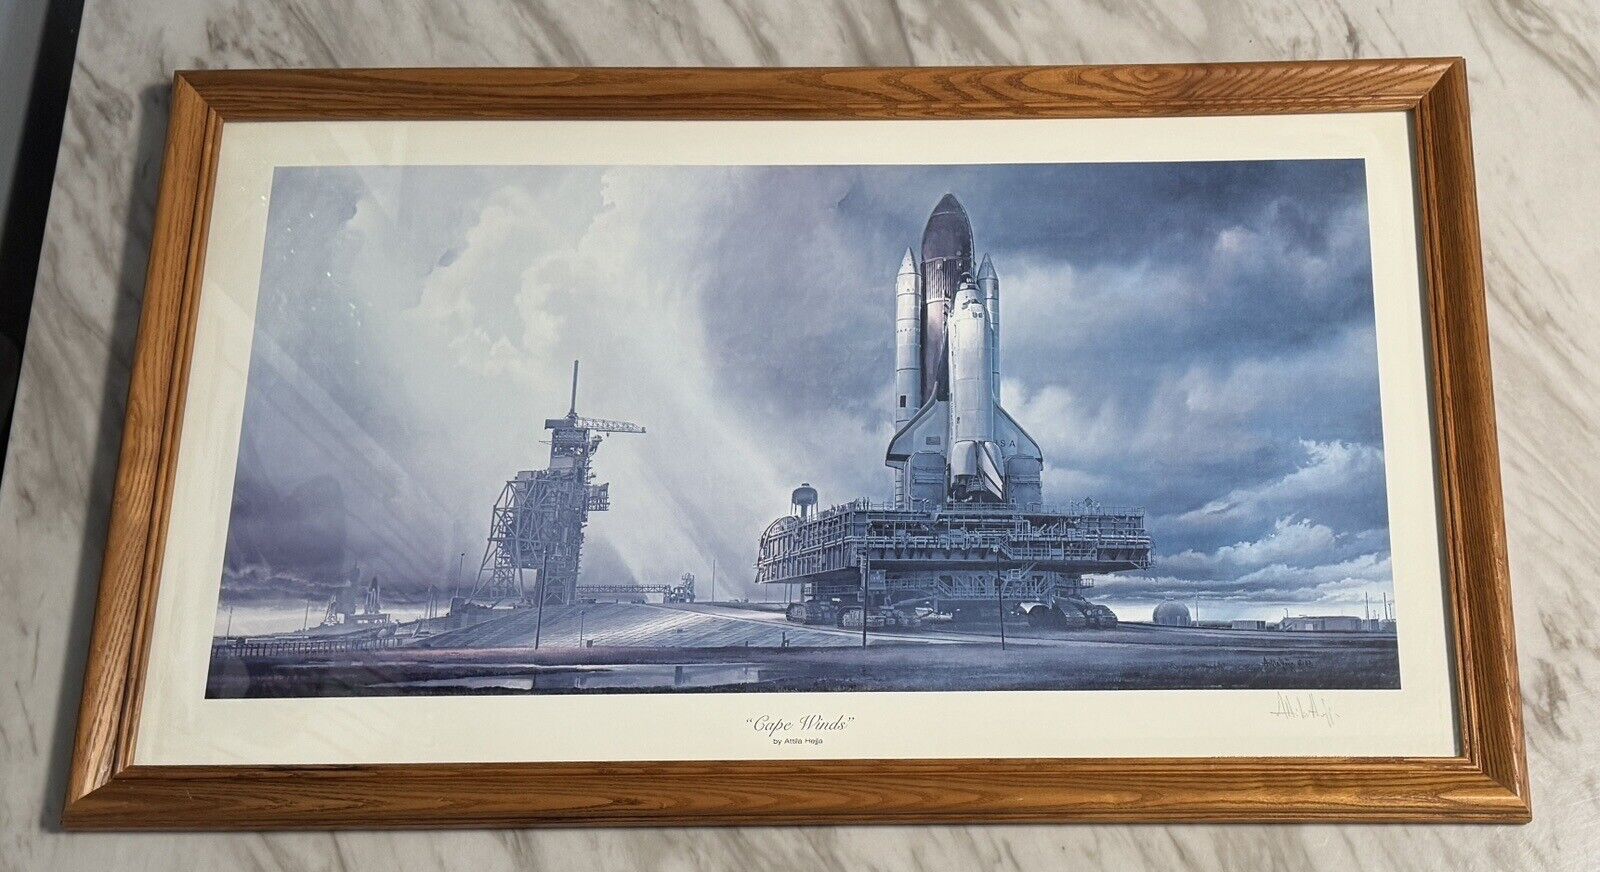 Cape Winds Space Shuttle 18x32 Print 1983 Signed by Attila Hejja Frame 34.5x20.5